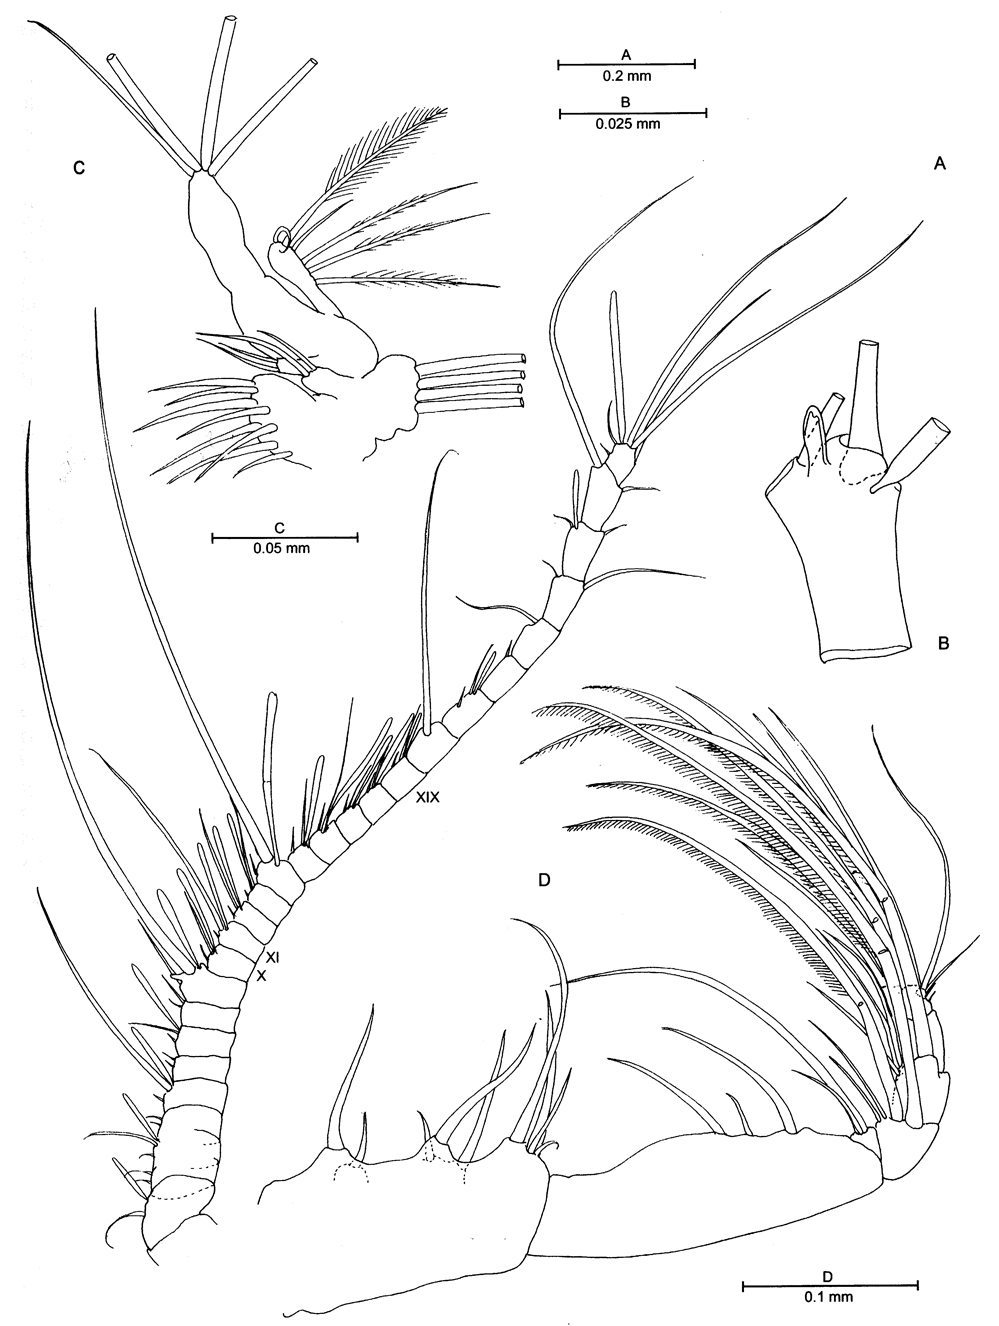 Species Oinella longiseta - Plate 4 of morphological figures